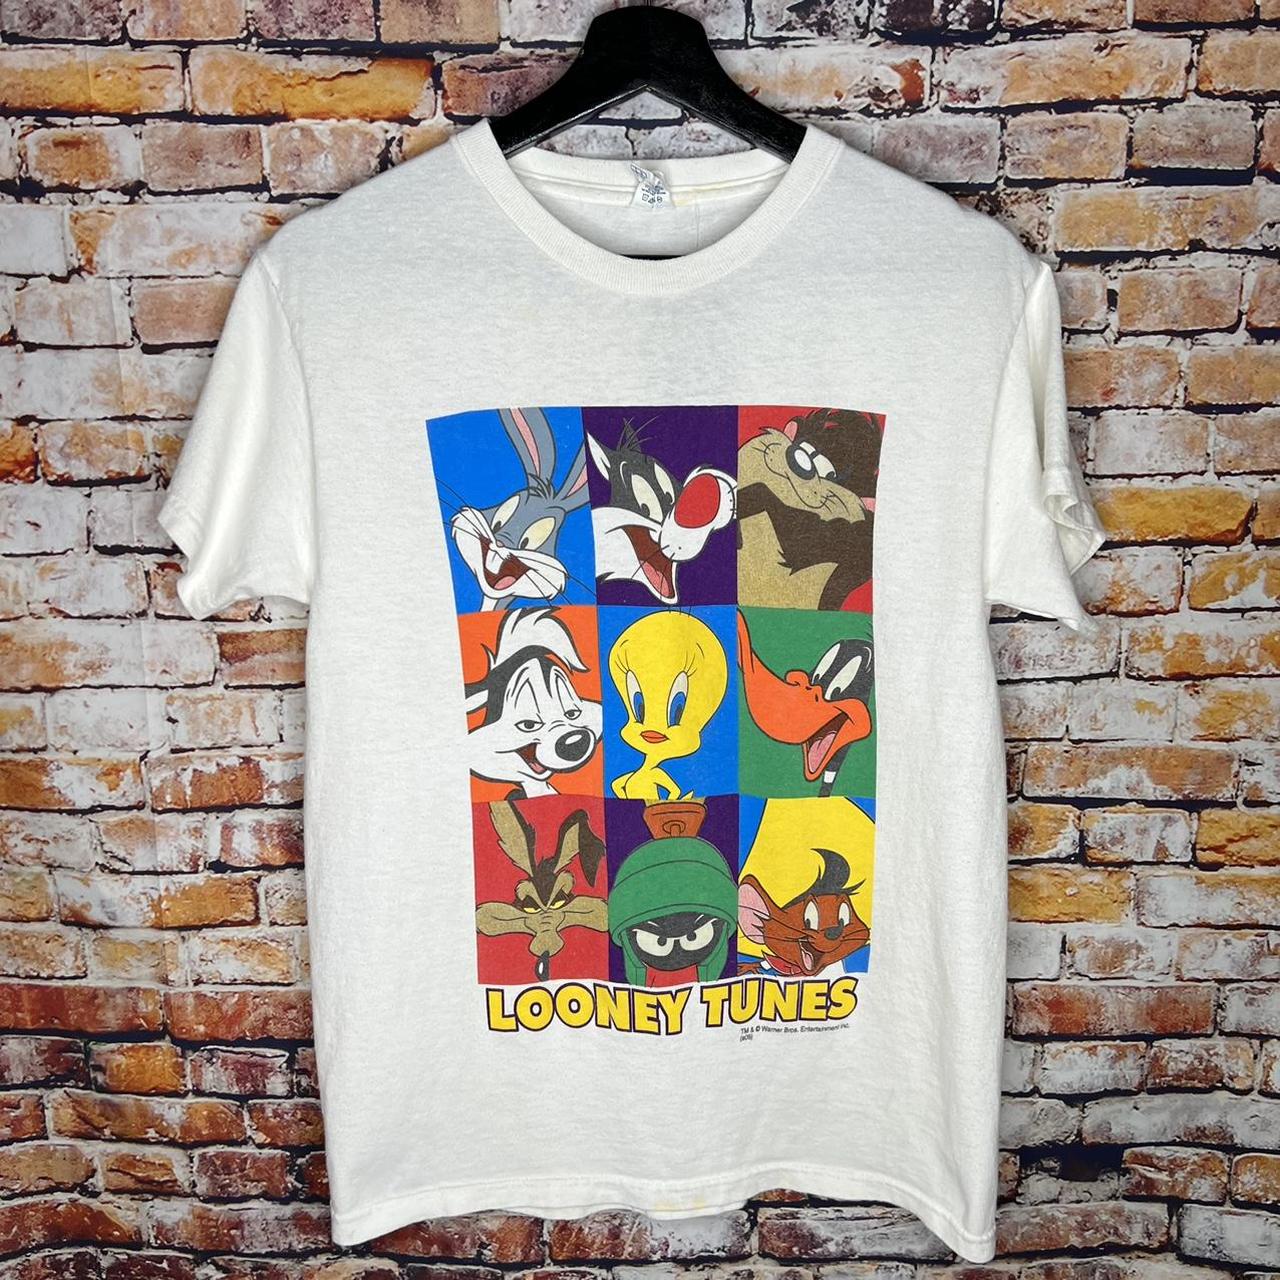 Looney Tunes Men's White T-shirt | Depop